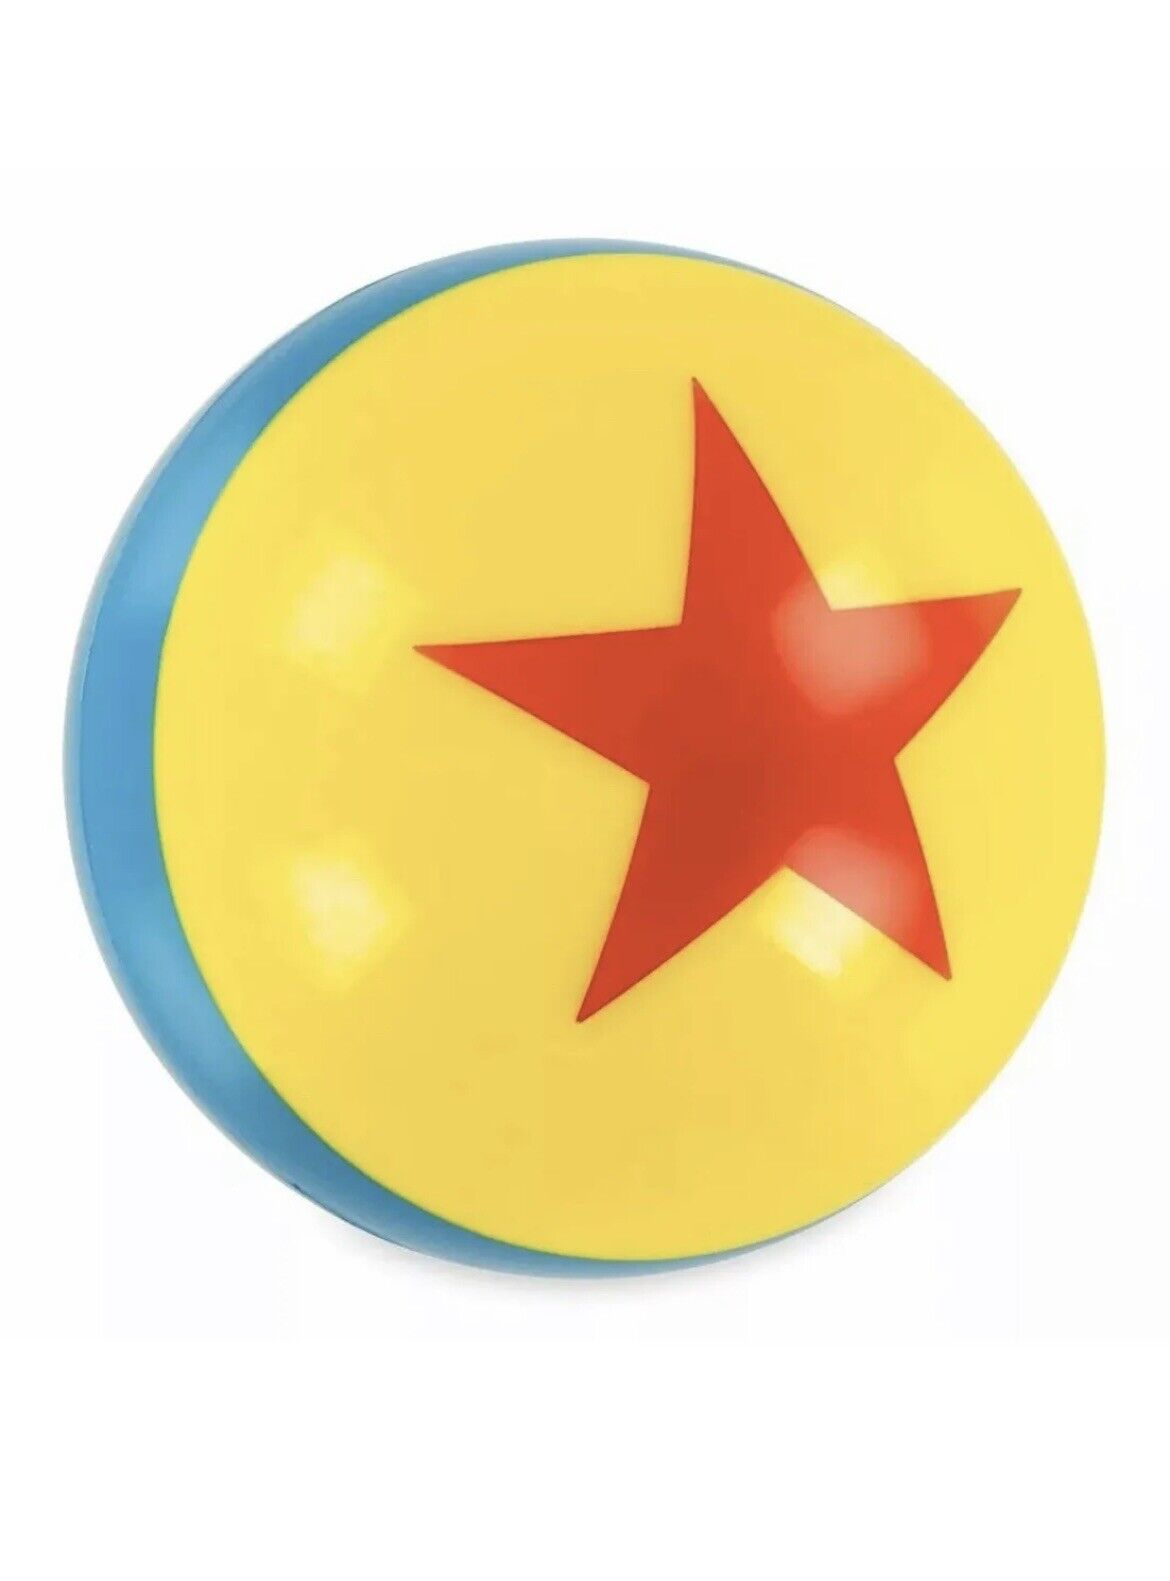 Disney Parks Pixar Toy Story Luxo Jr Thick Bouncy Ball (4” Approx. Diameter)